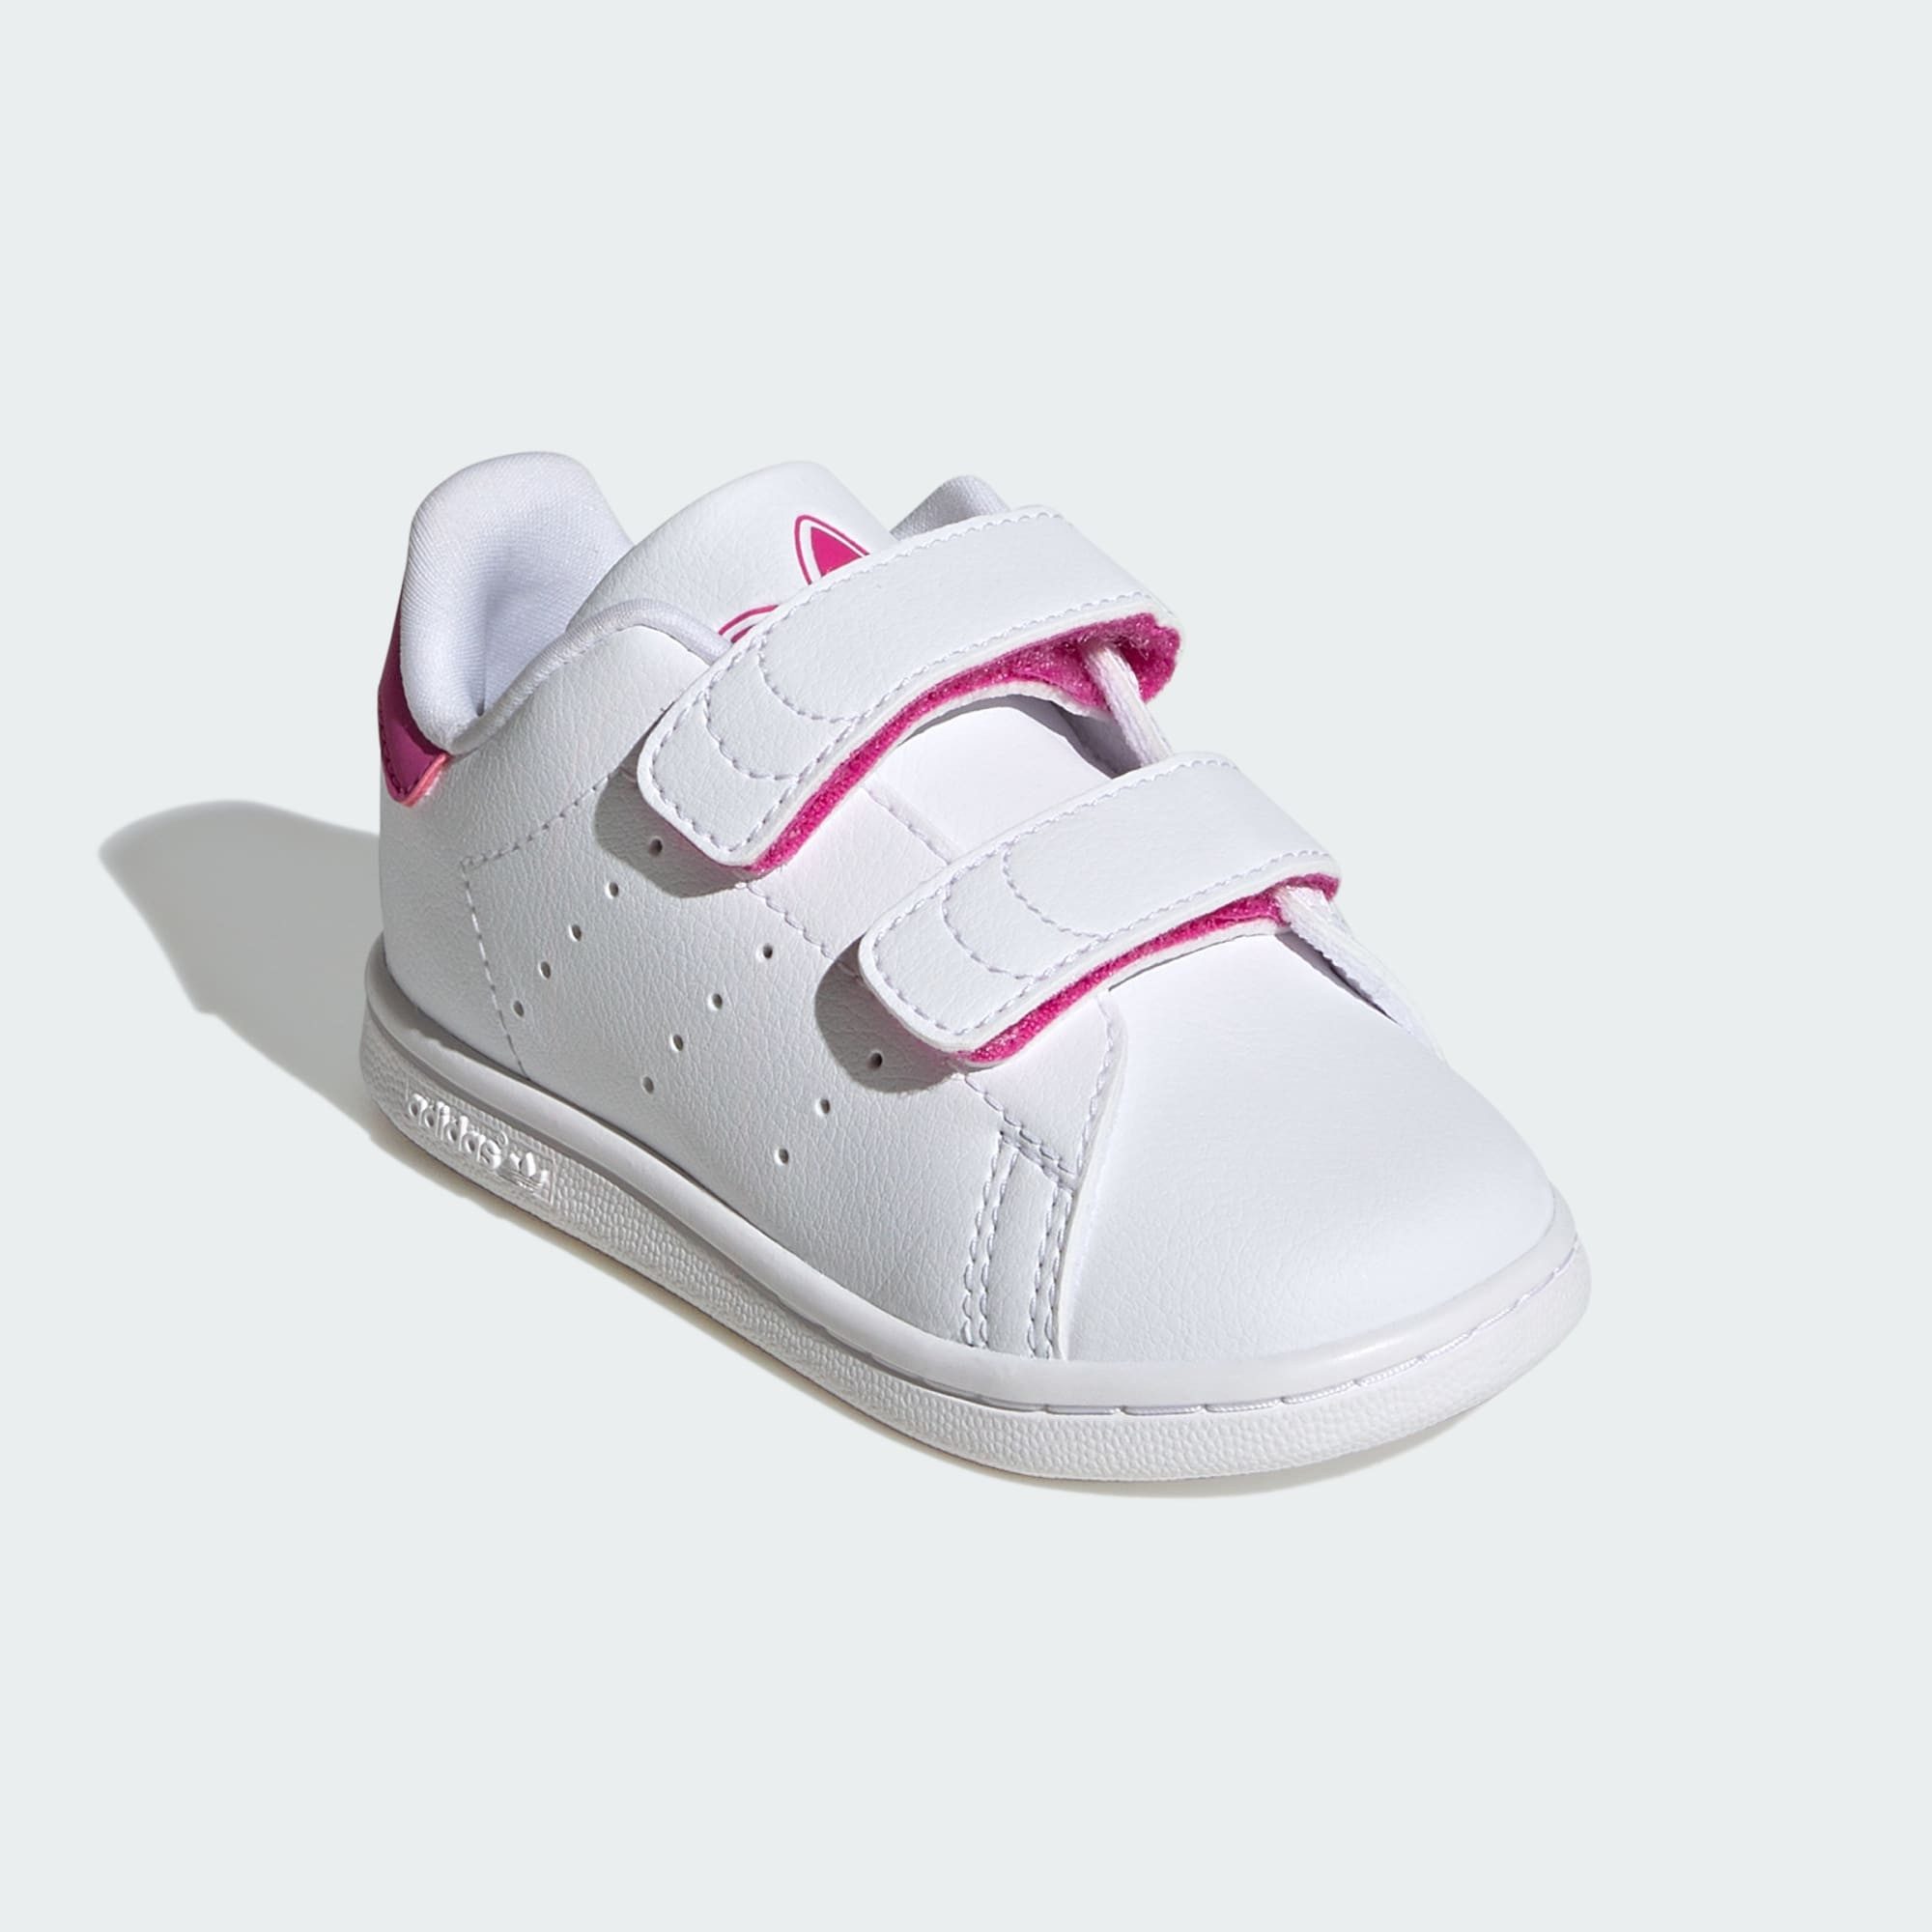 adidas Originals STAN SMITH COMFORT CLOSURE KIDS SCHUH Sneaker